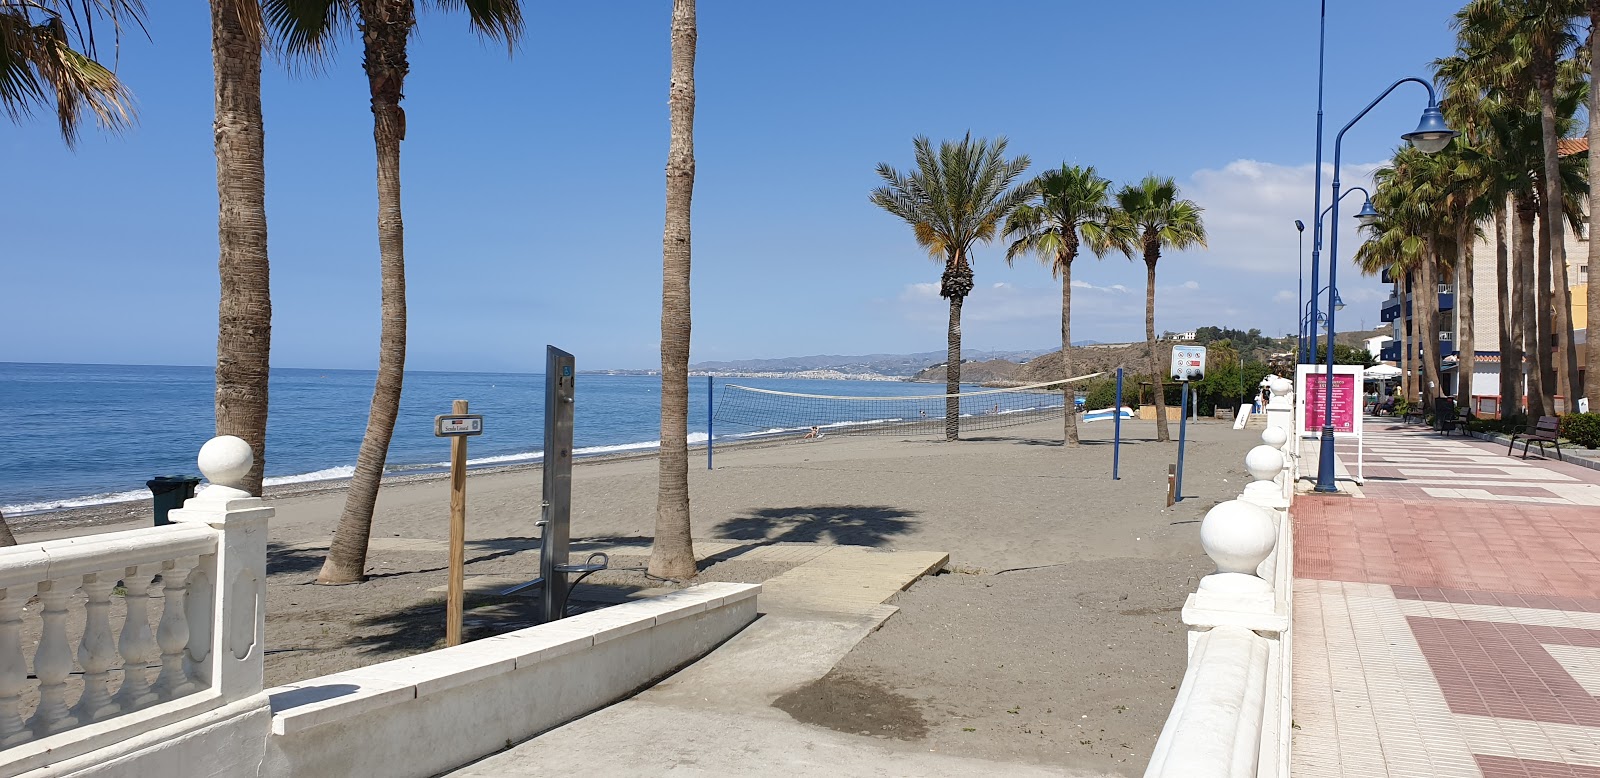 Foto di Playa de el Morche e l'insediamento